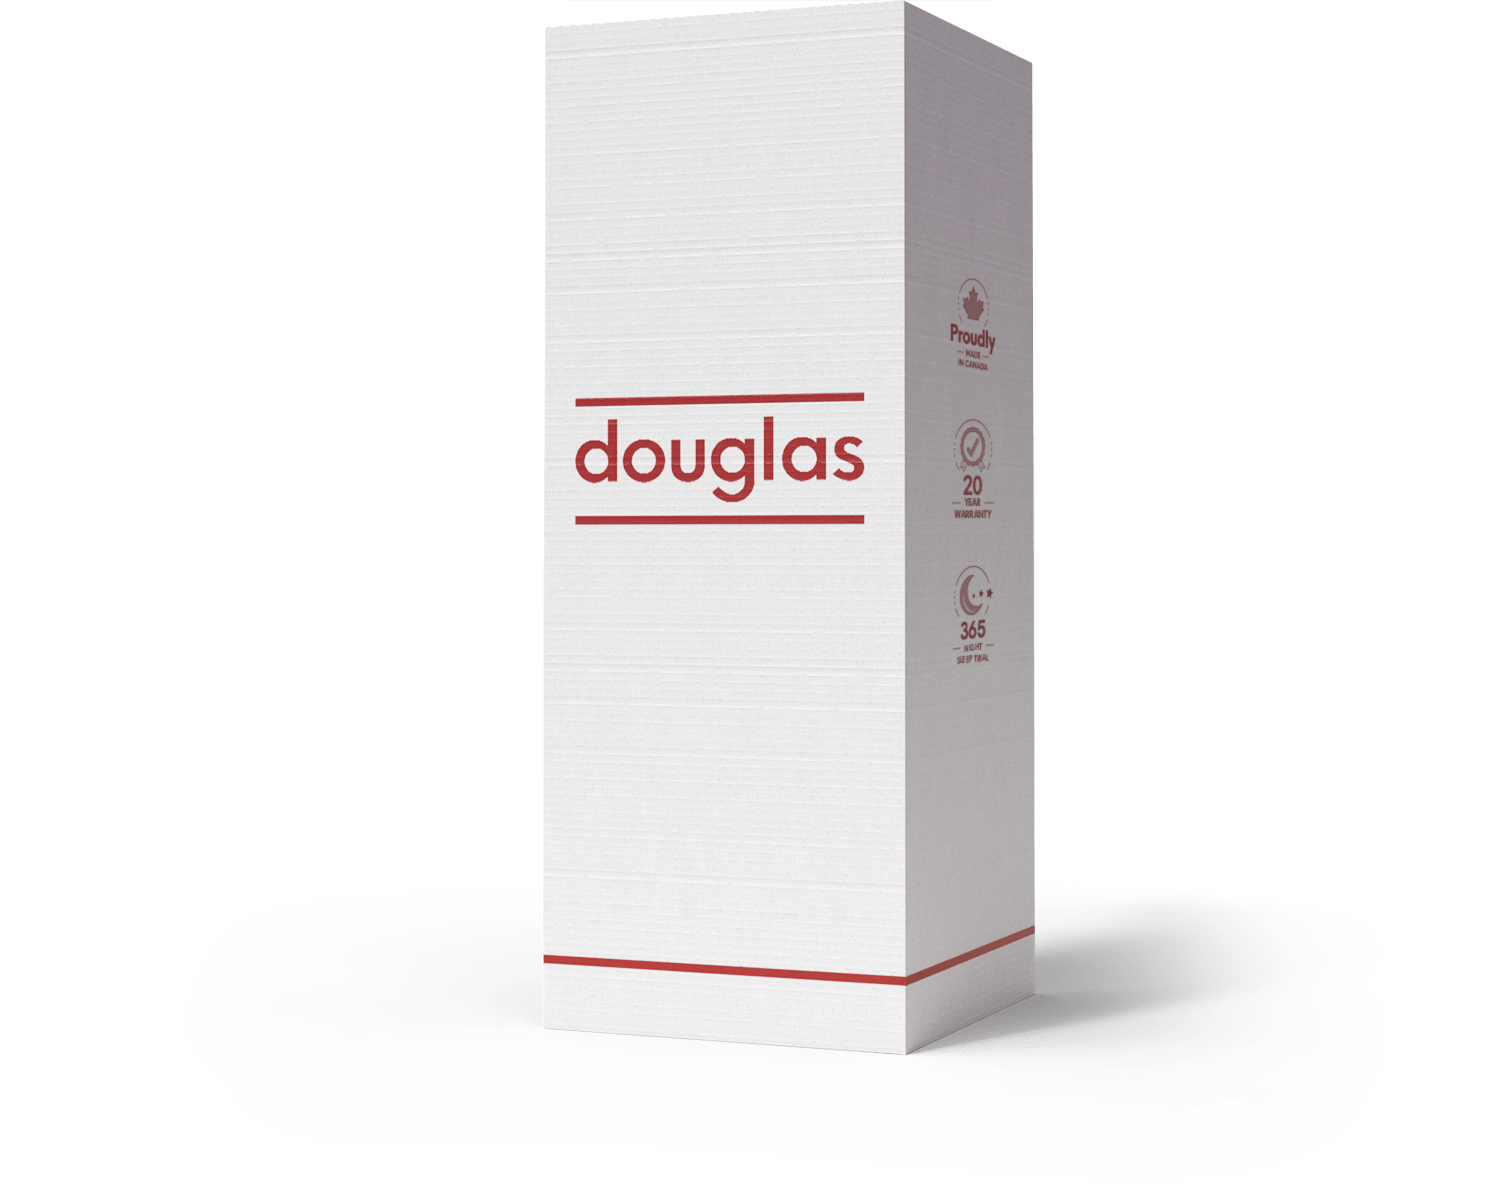 Douglas mattress box